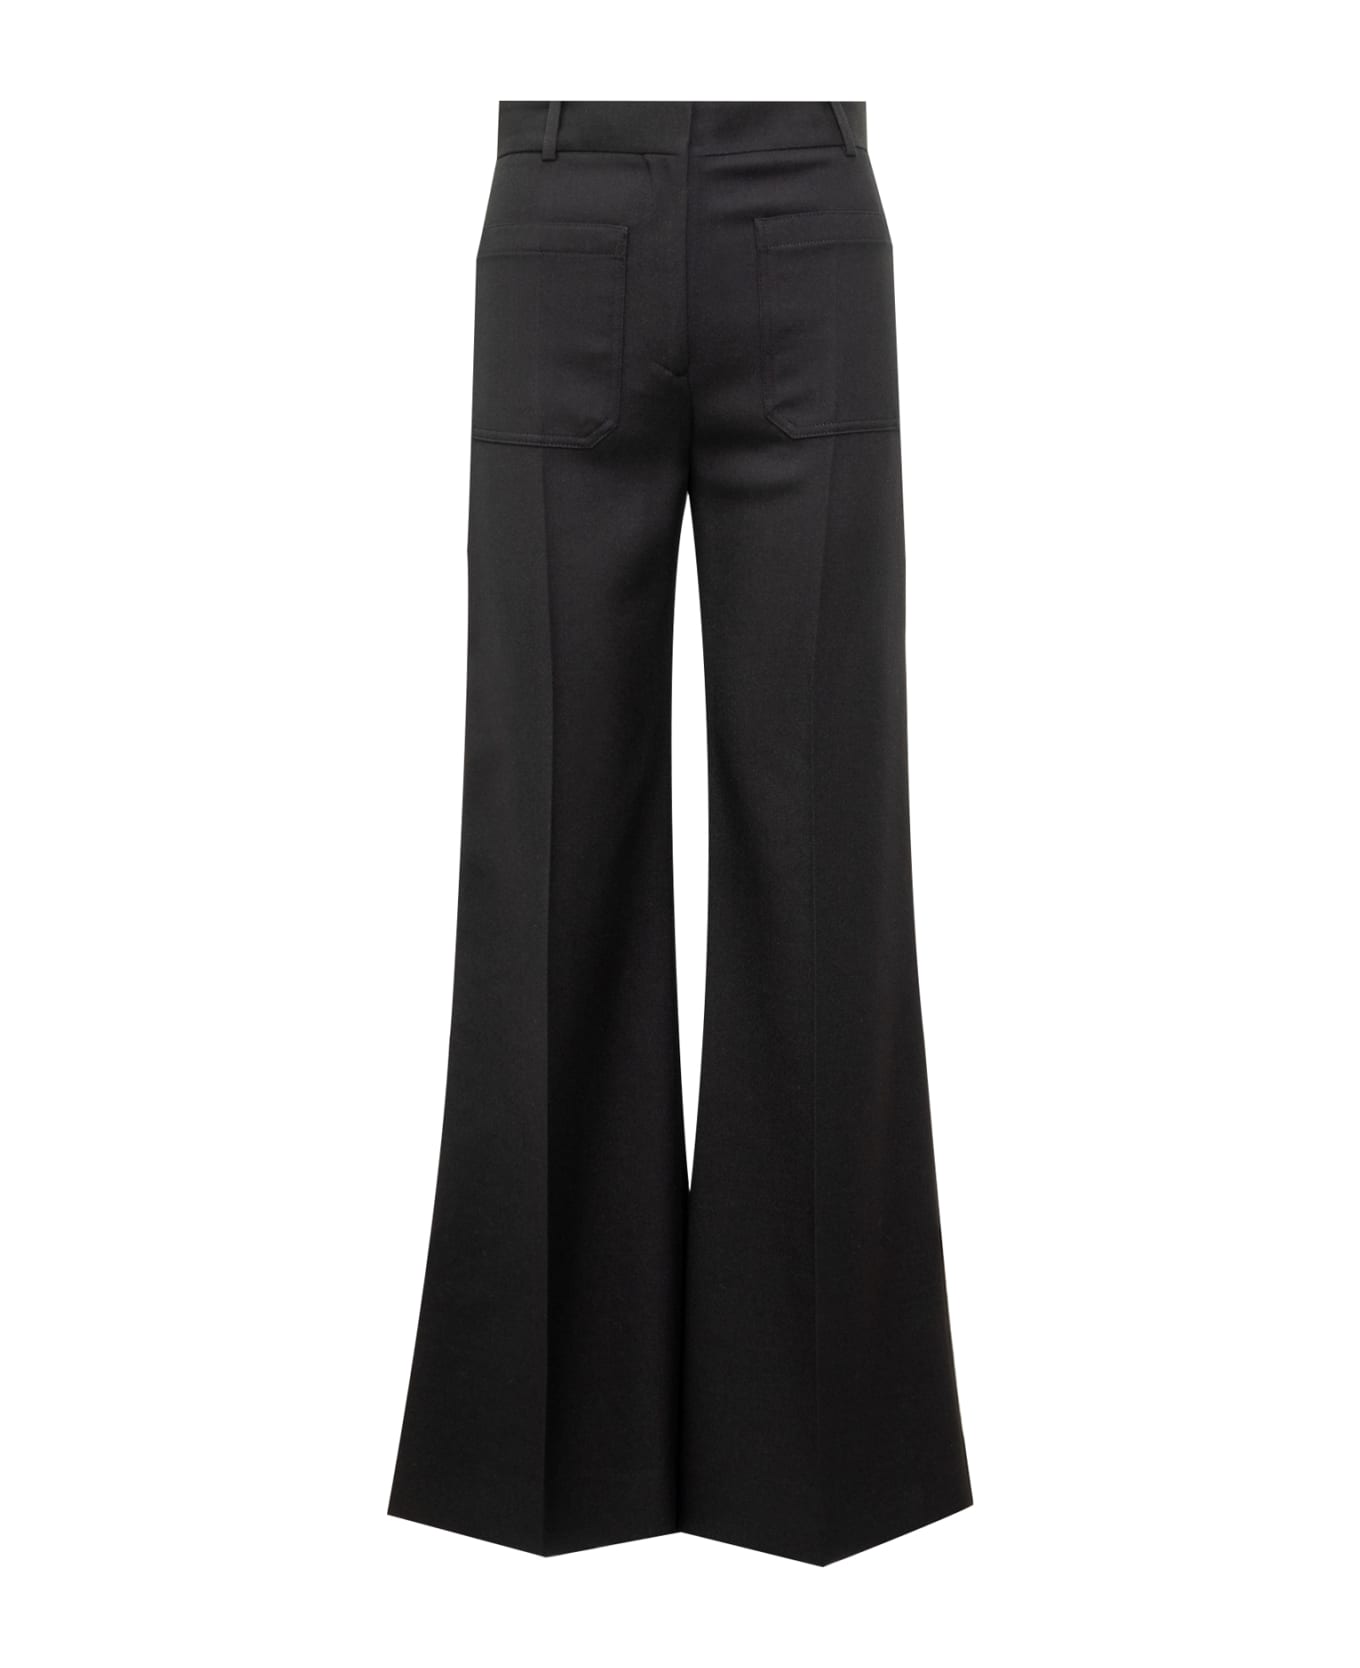 Victoria Beckham Alina Tailored Trousers - BLACK